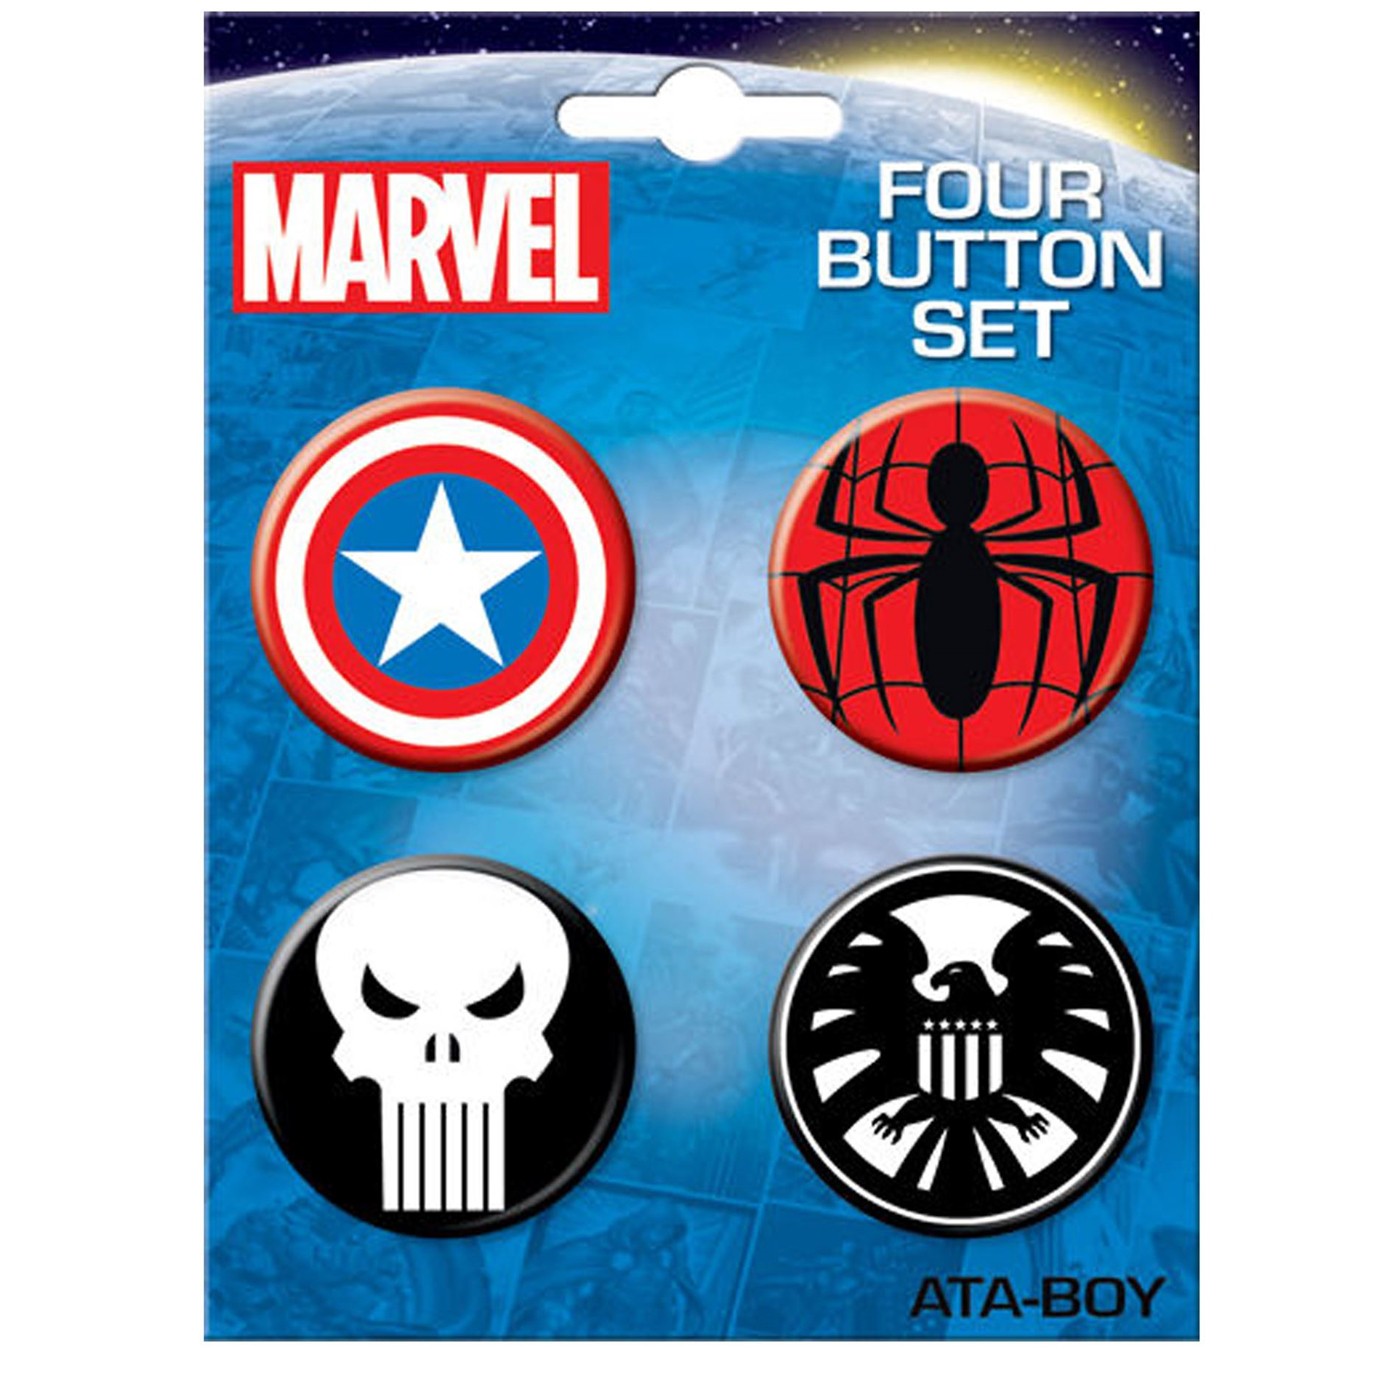 Marvel Four Button Set 2 w/Spiderman Symbol